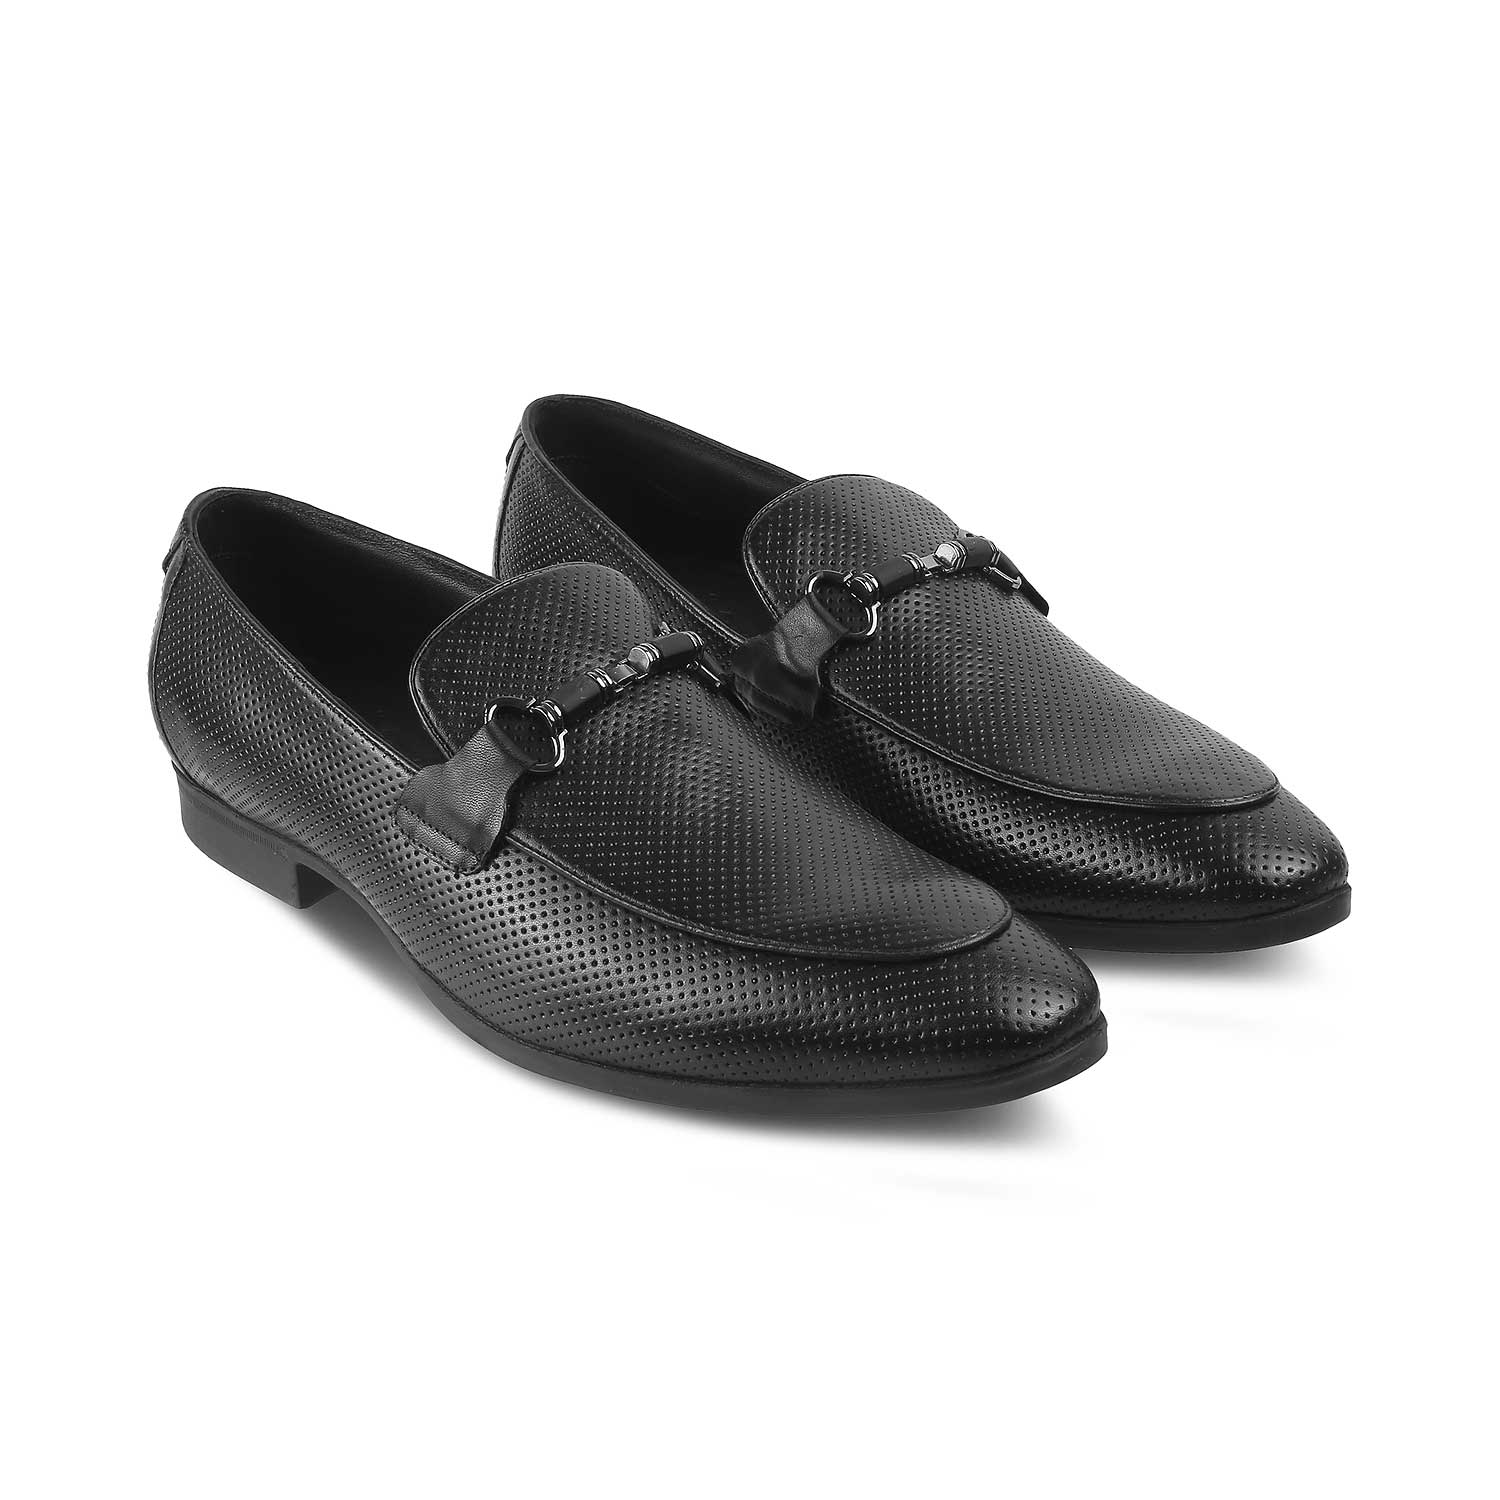 The Roshbuck Black Leather Loafers for Men Online at Tresmode.com